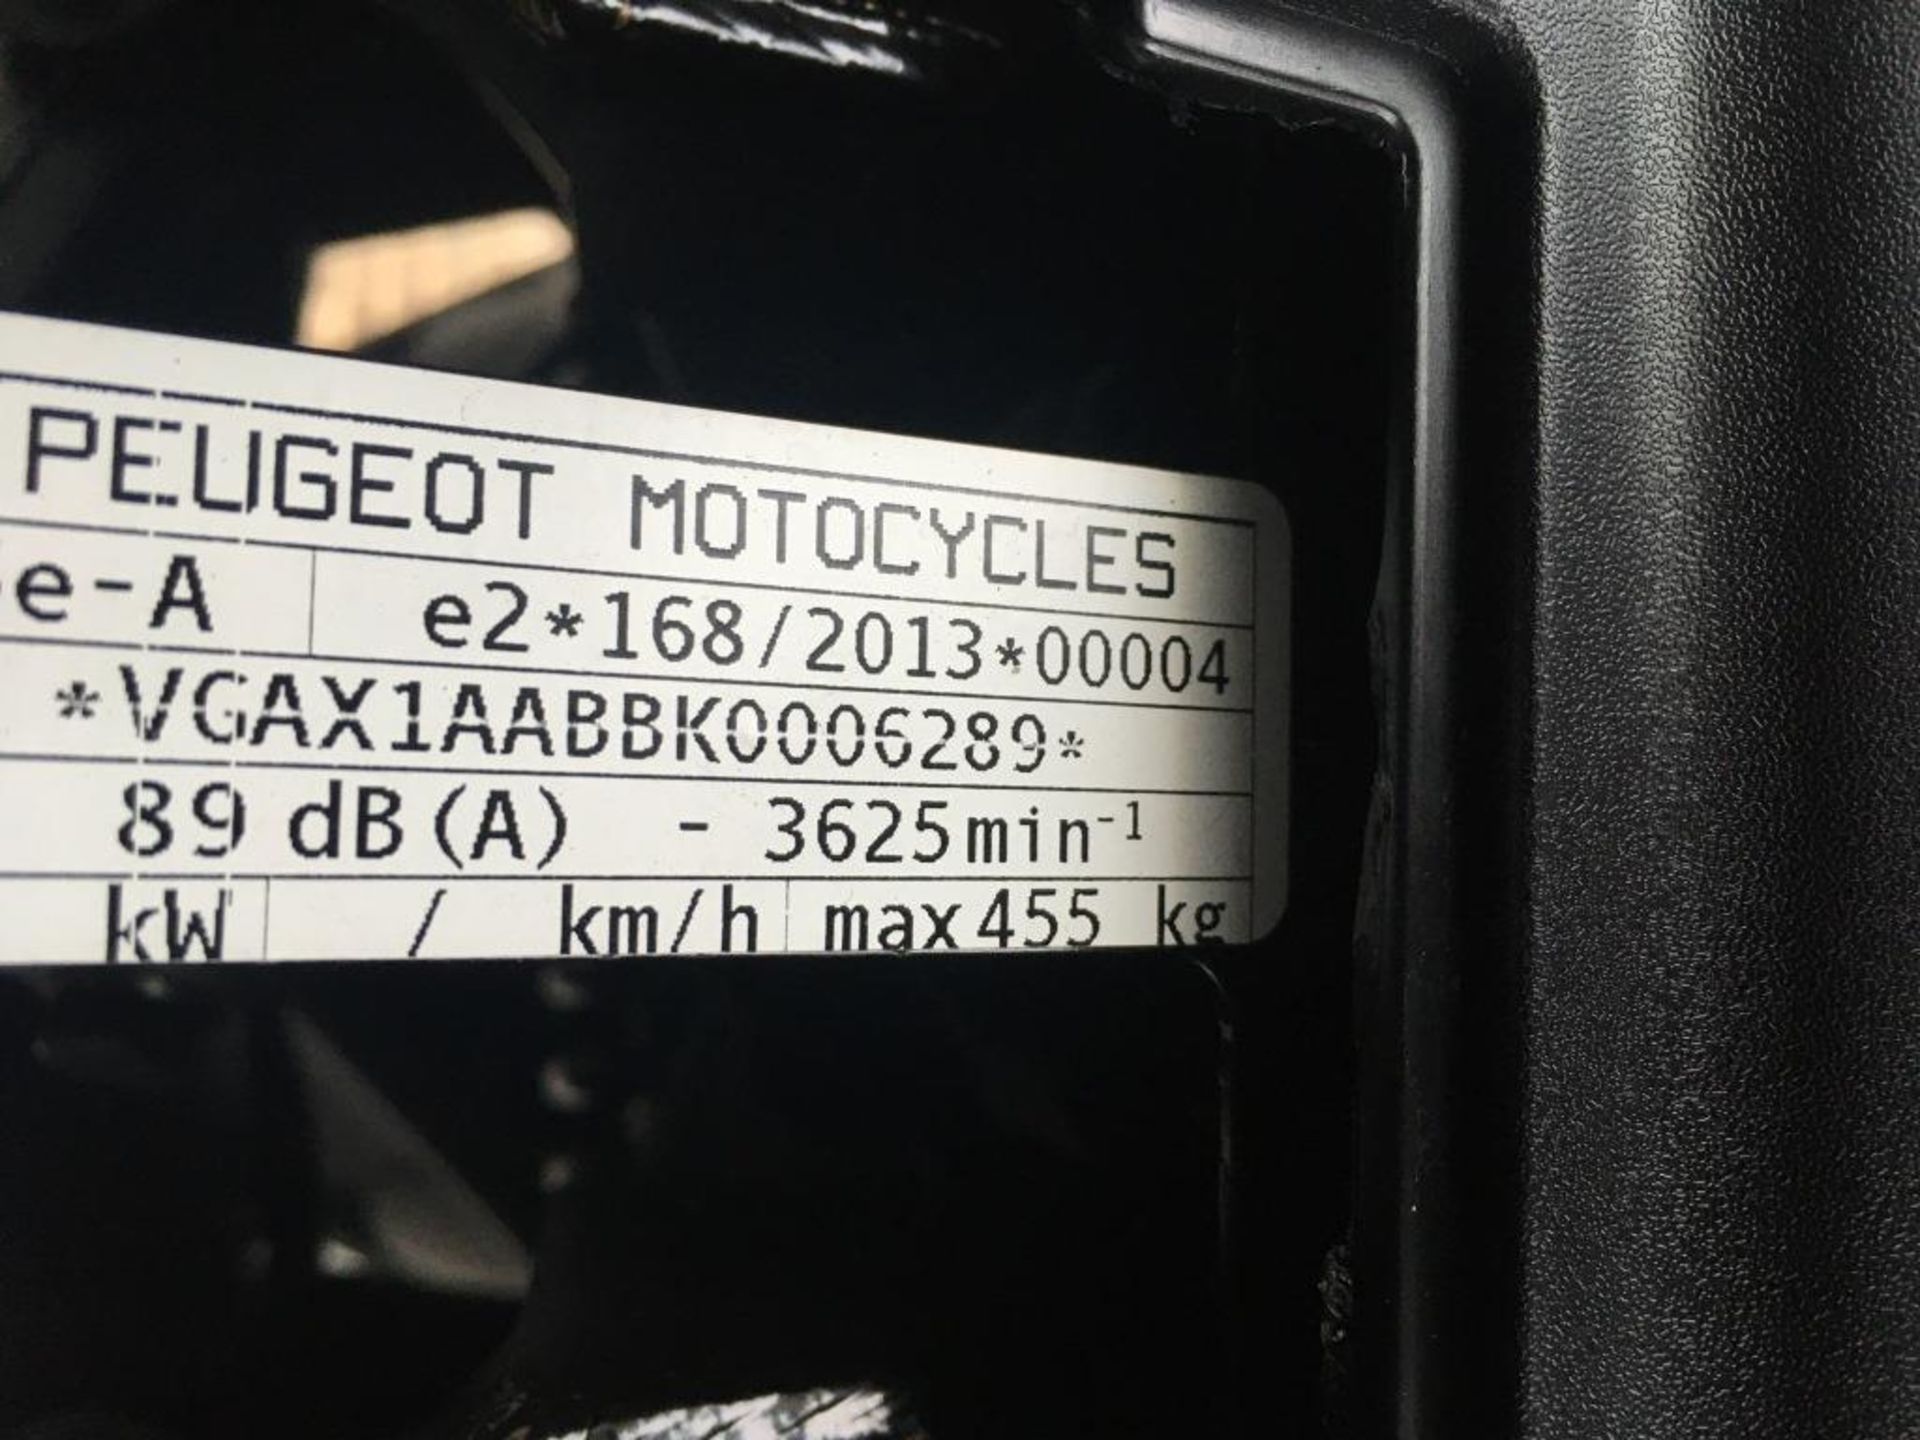 Peugeot Metropolis 400 RS ABS moped Registration Number: HG69 CUH, VIN: VGAX1AABBK0006289. V5 not - Image 7 of 7